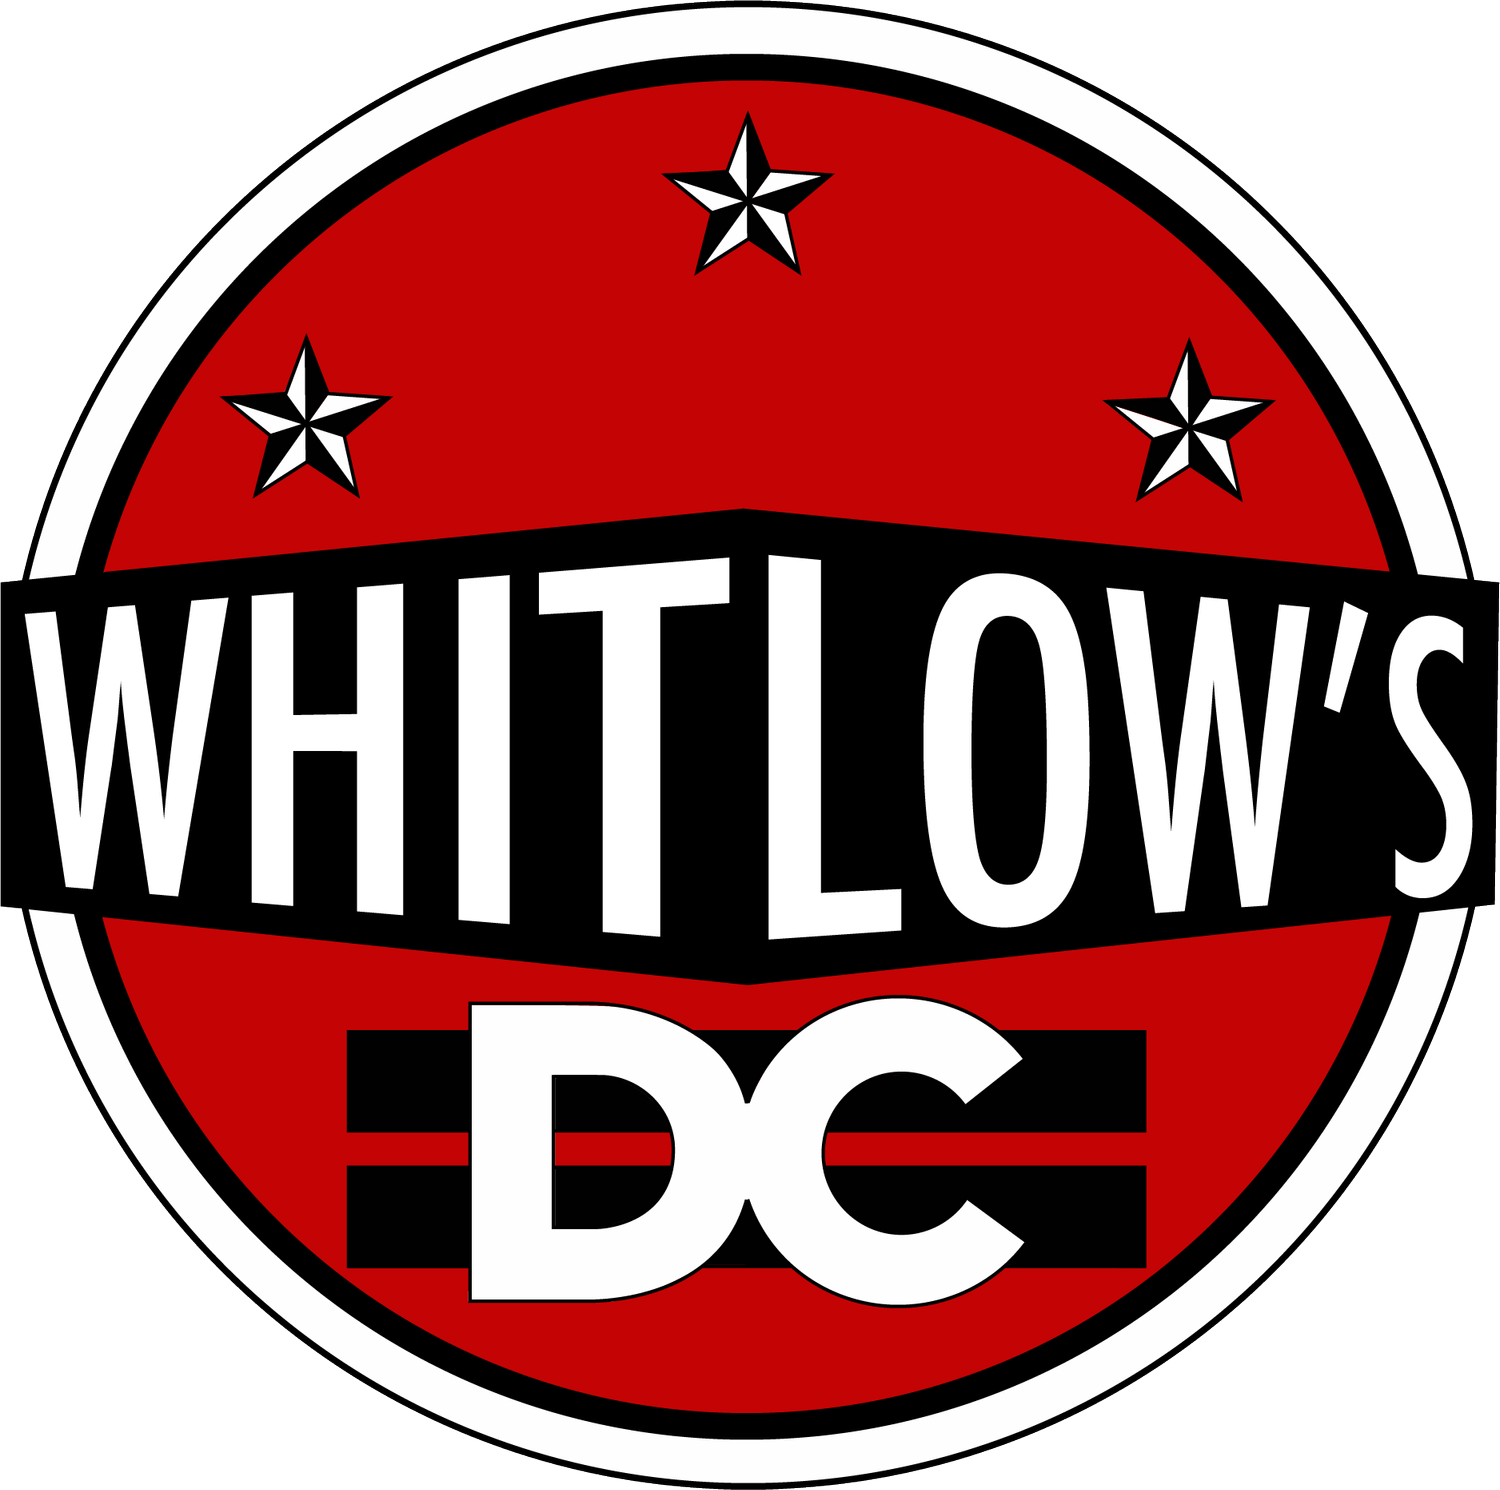 Whitlow's DC - Neighborhood Bar, Live Music Bar, and Rooftop Bar